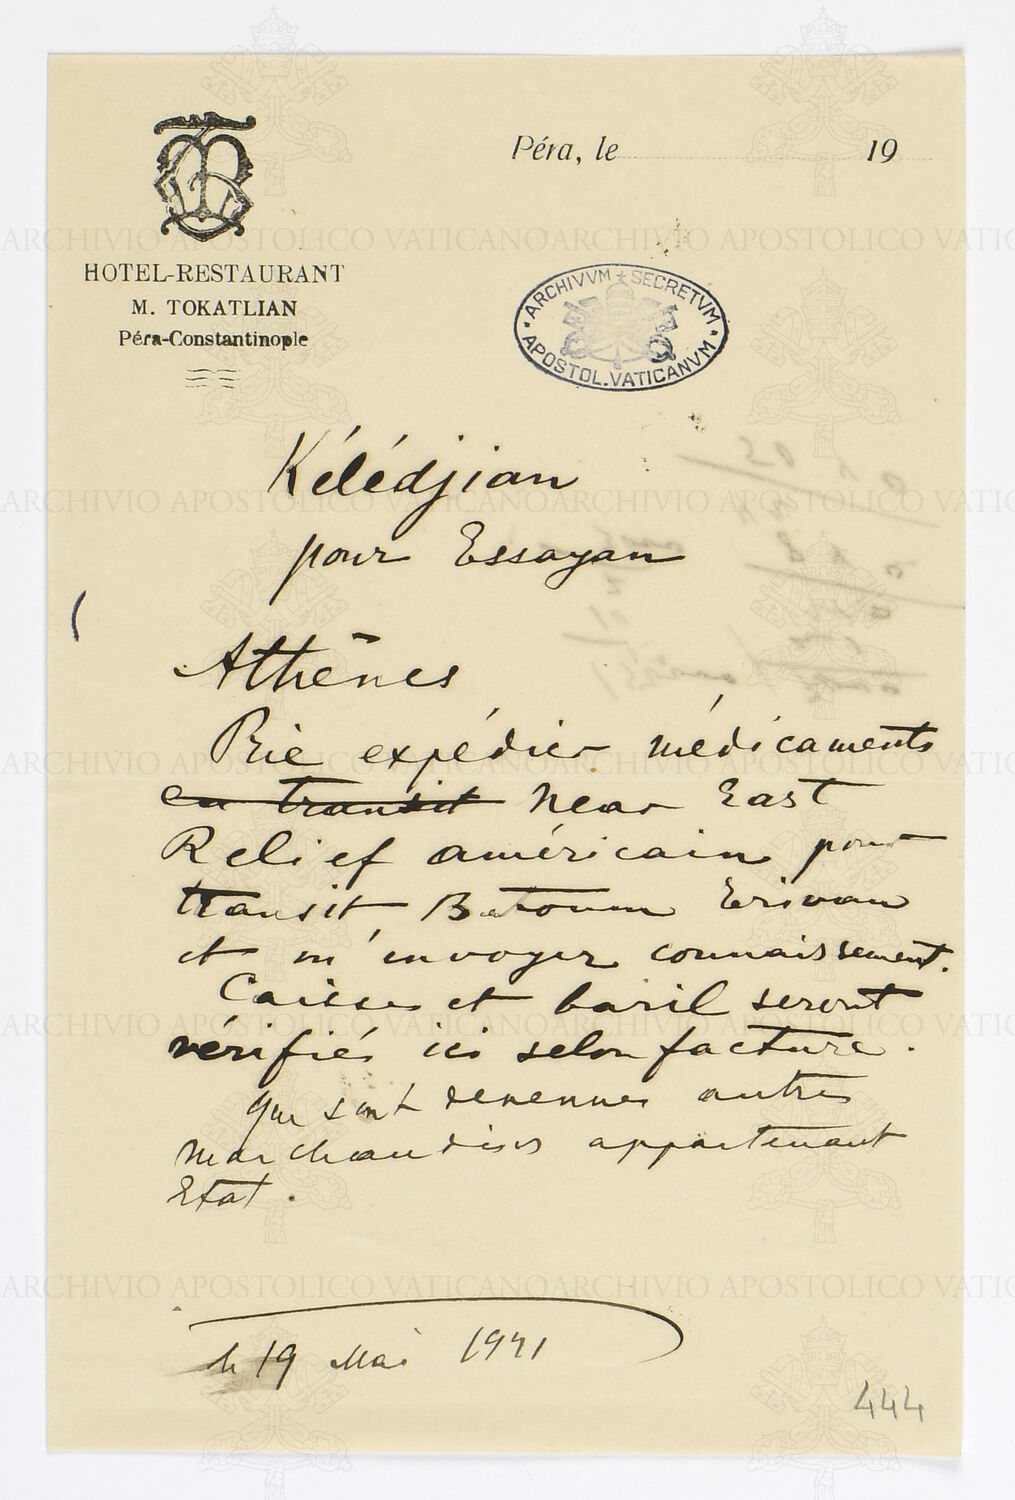 Note on the Tokatlian Hotel’s headed paper, 1921. Archivio Apostolico Vaticano